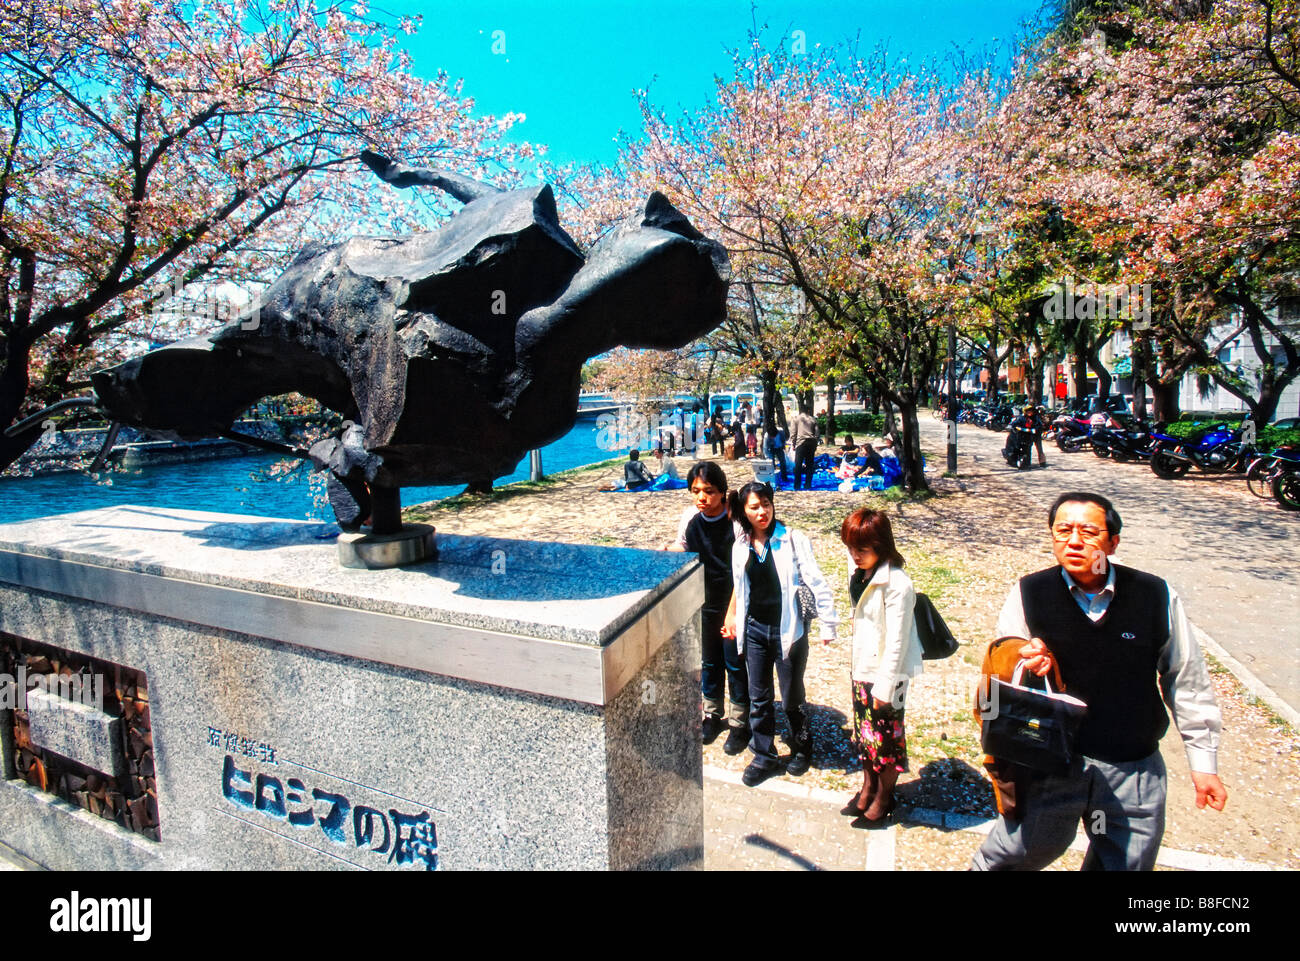 Visitors look at the Hiroshima Peace Monument which is located in the Hiroshima Peace Memorial Park in Hiroshima Japan. Stock Photo